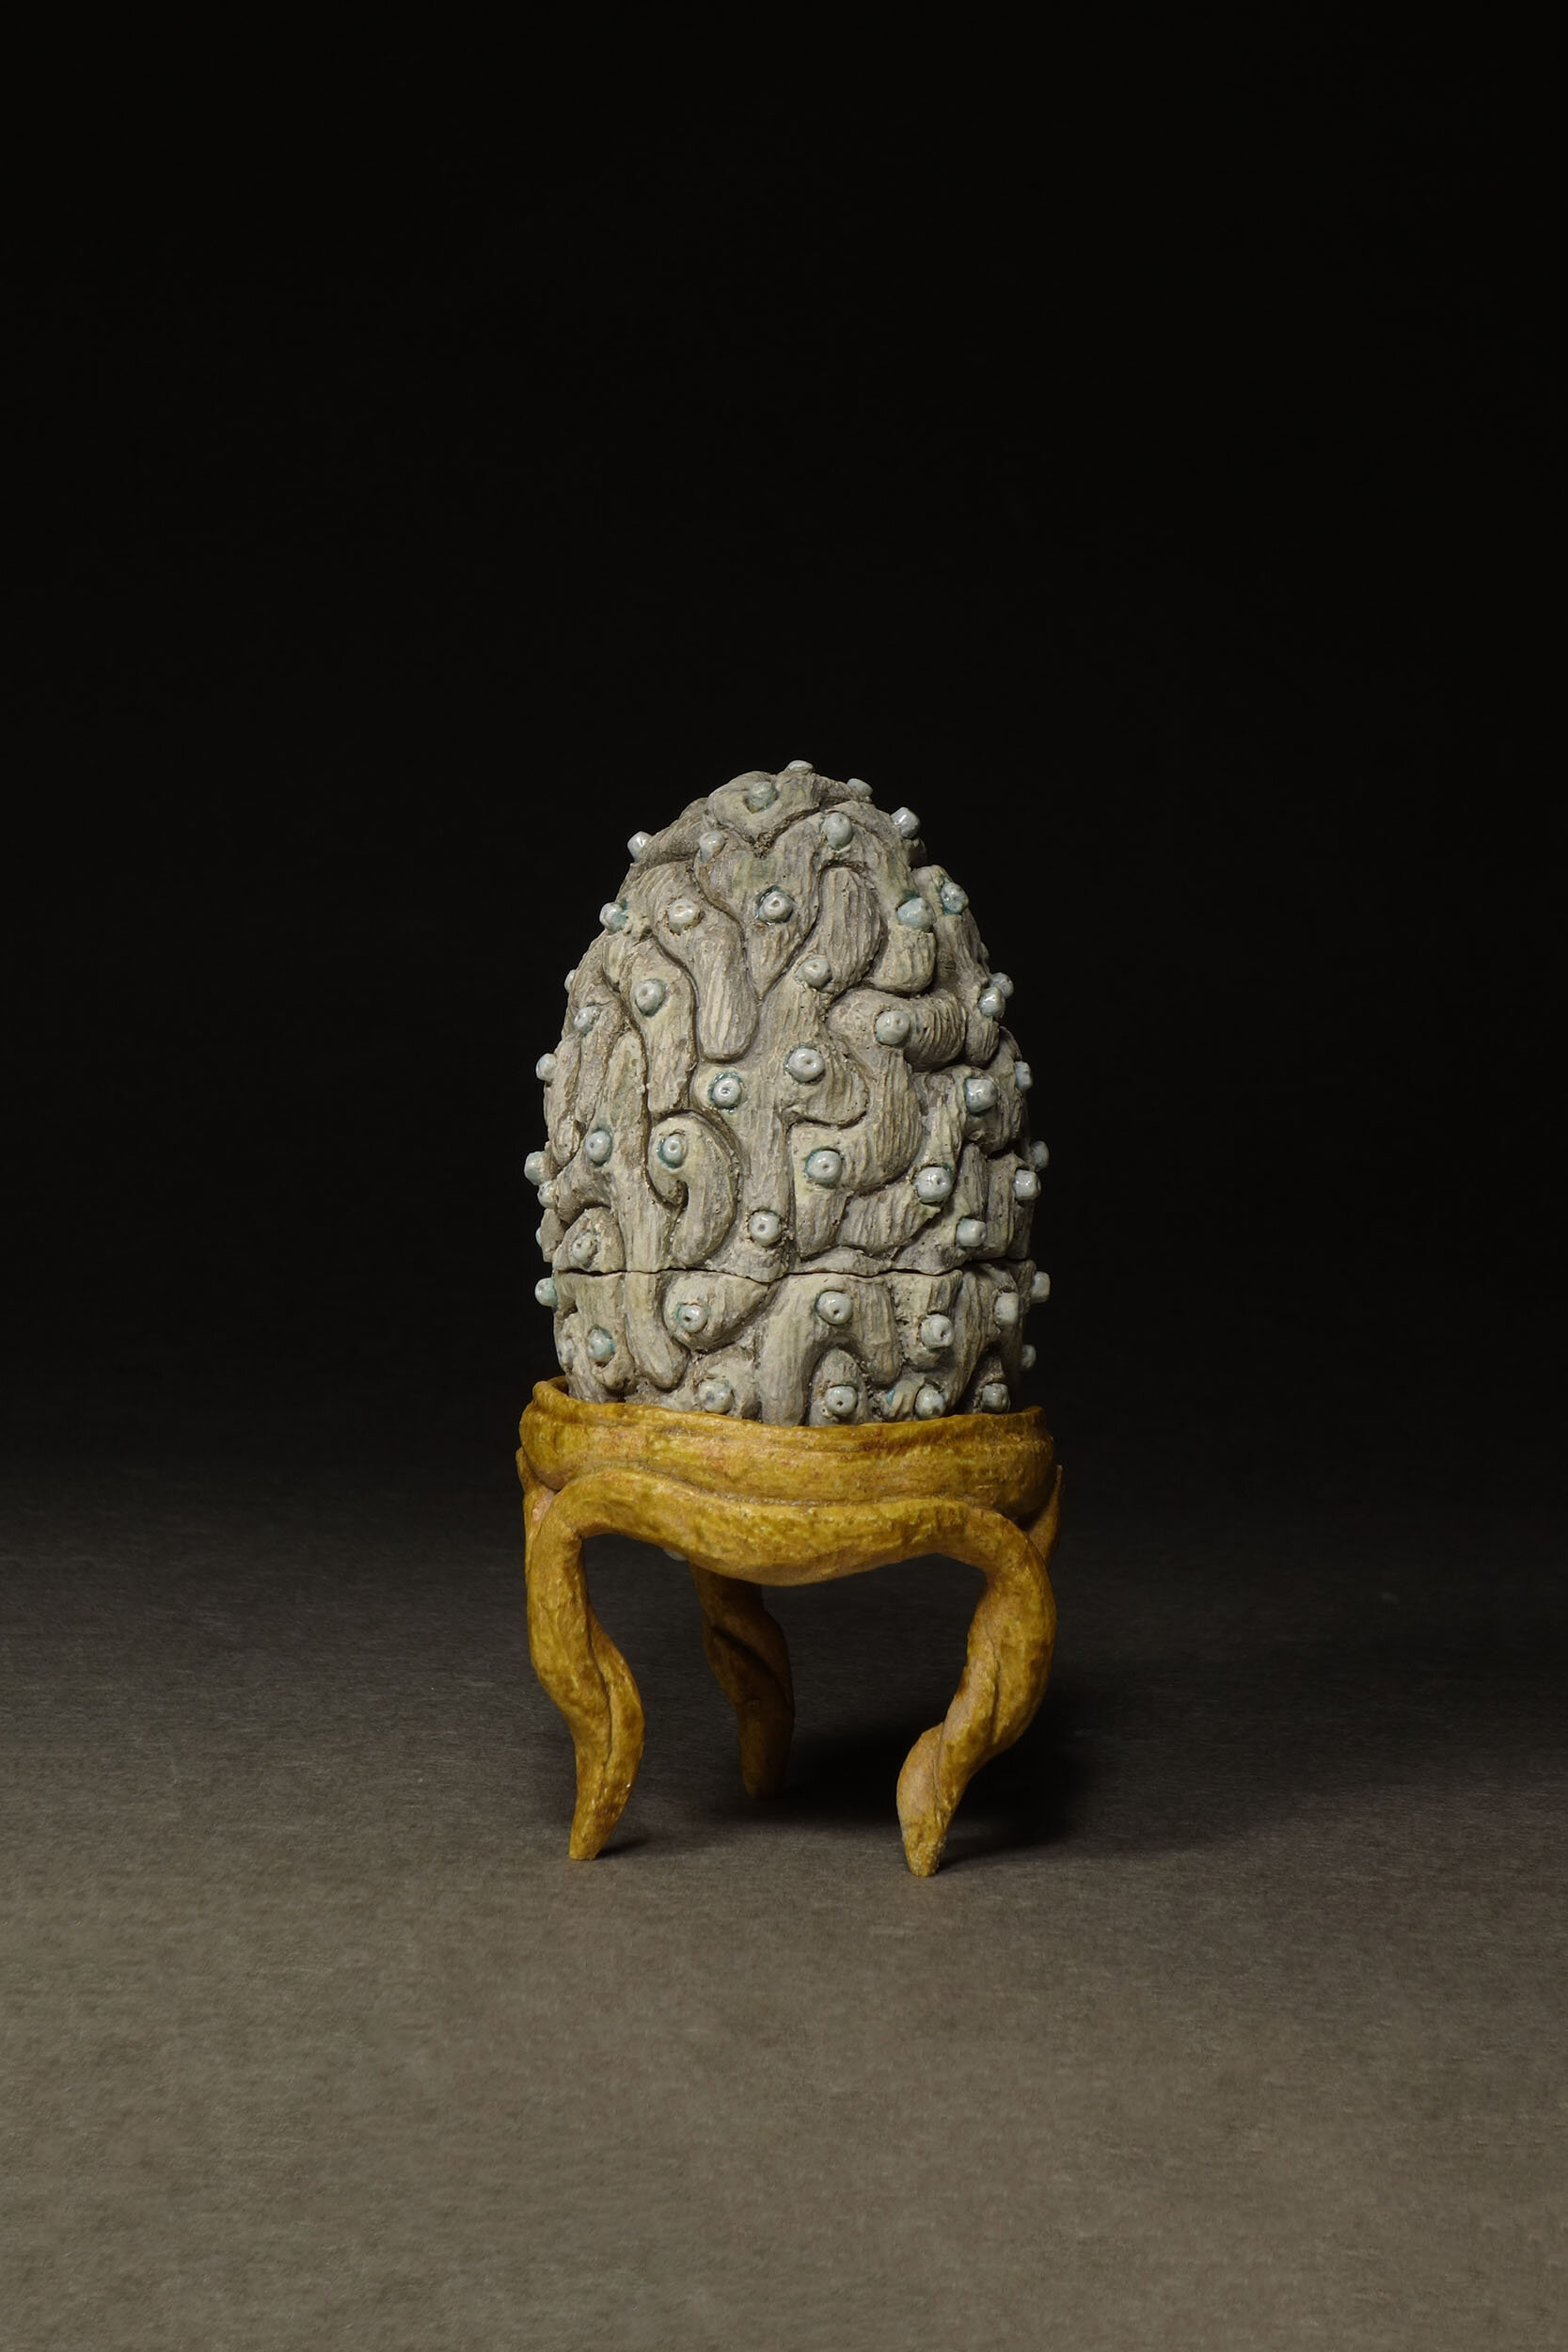   Fabergé Egg 1 , Ceramic Sculpture: 2015, glazed ceramic 